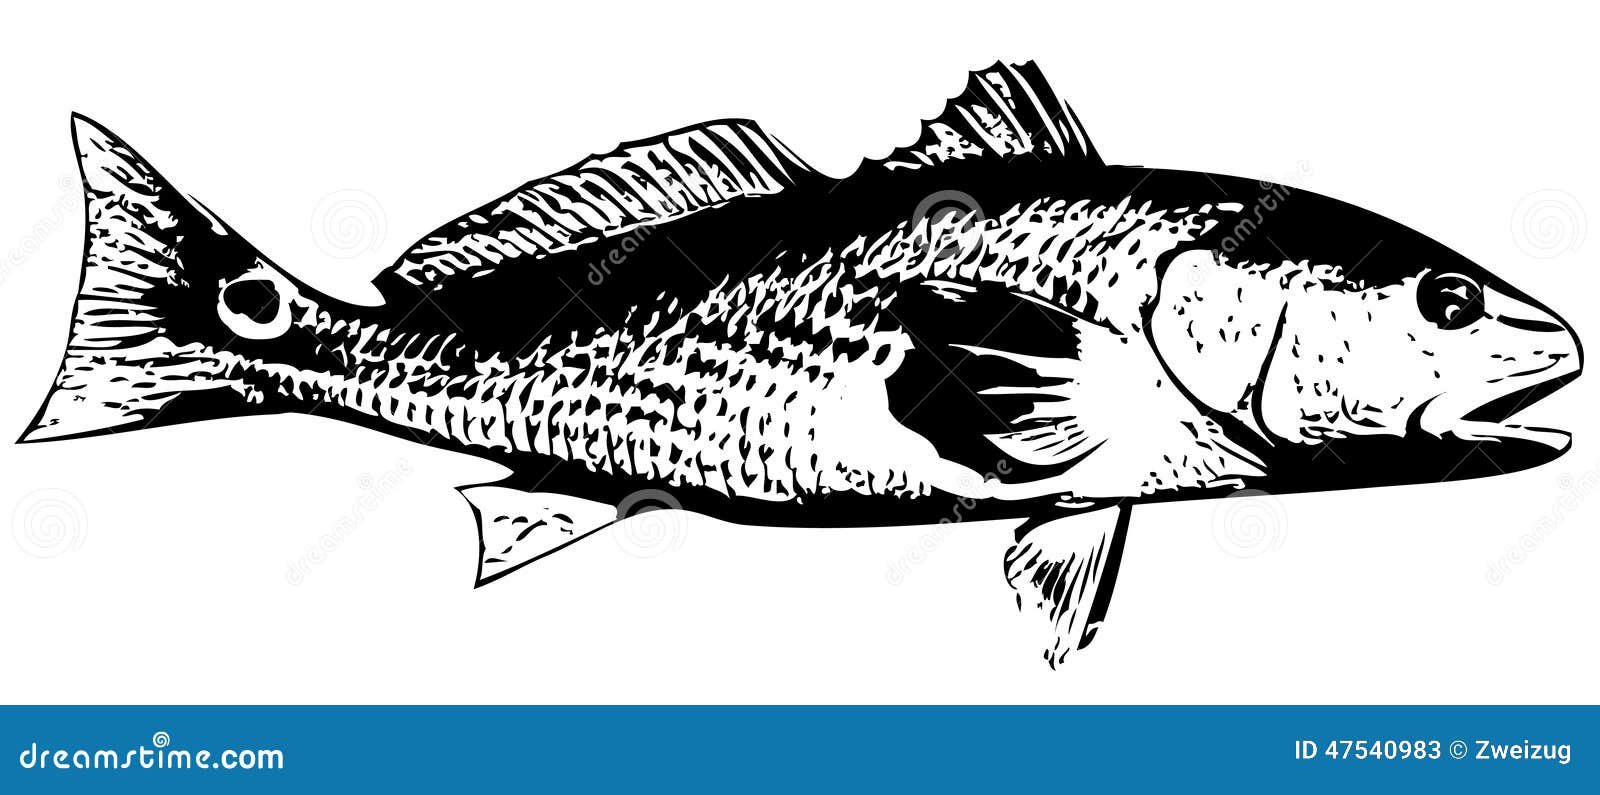 Red Drum Fish Vector Stock Illustrations – 151 Red Drum Fish